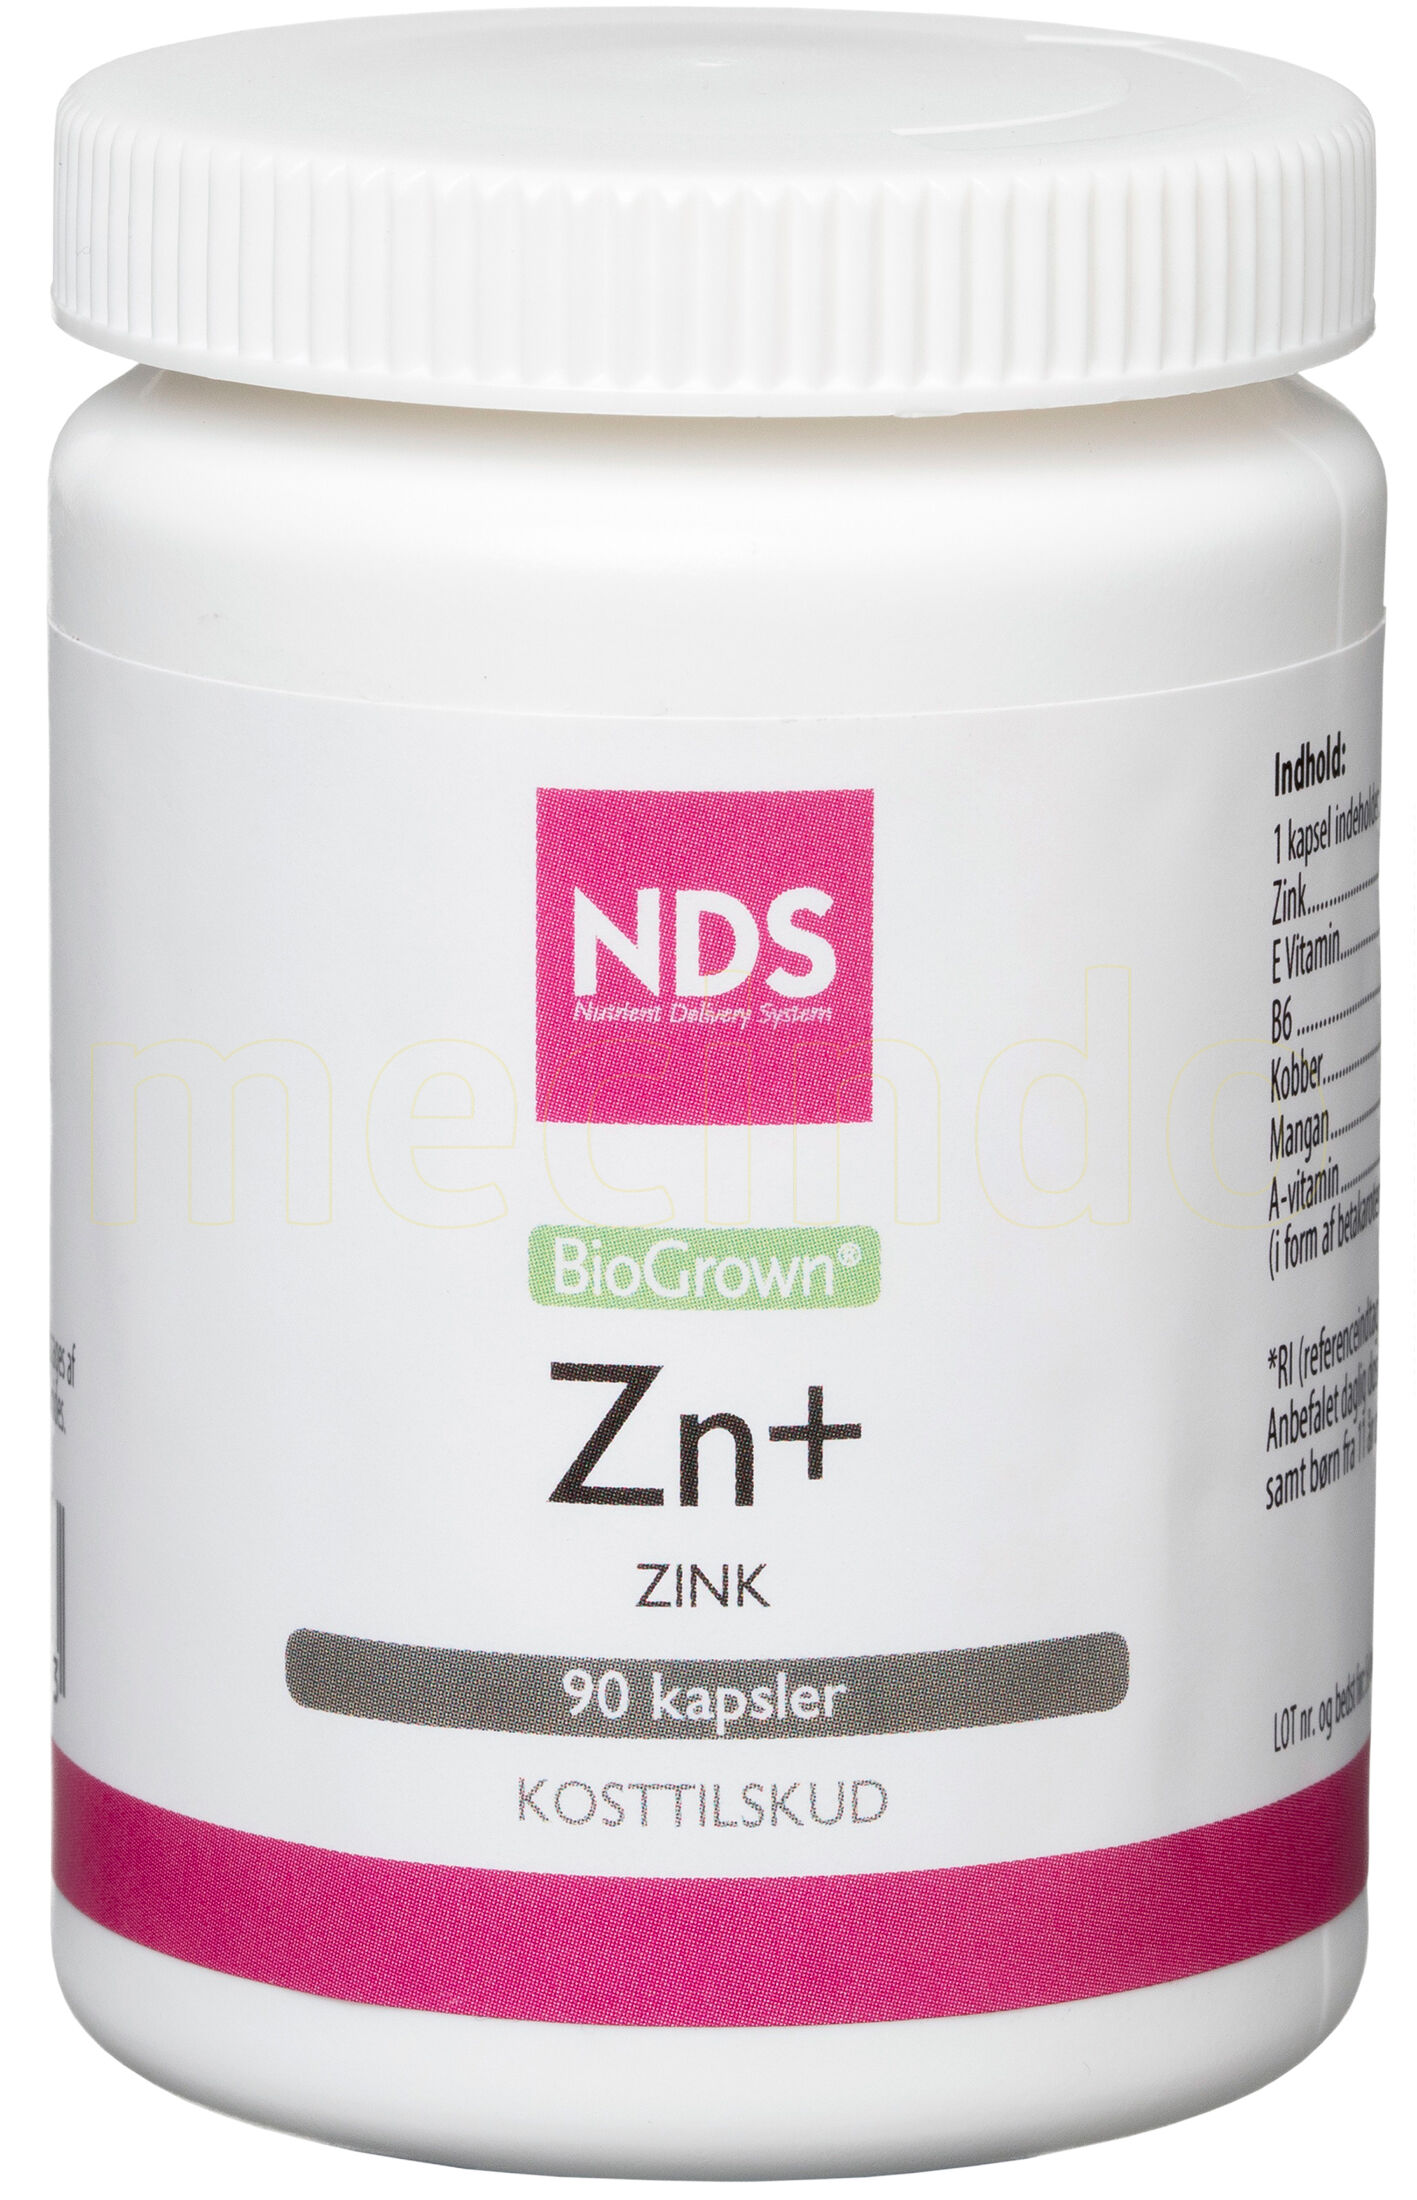 NDS Zn+ Sinktabletter - 90 Tabletter